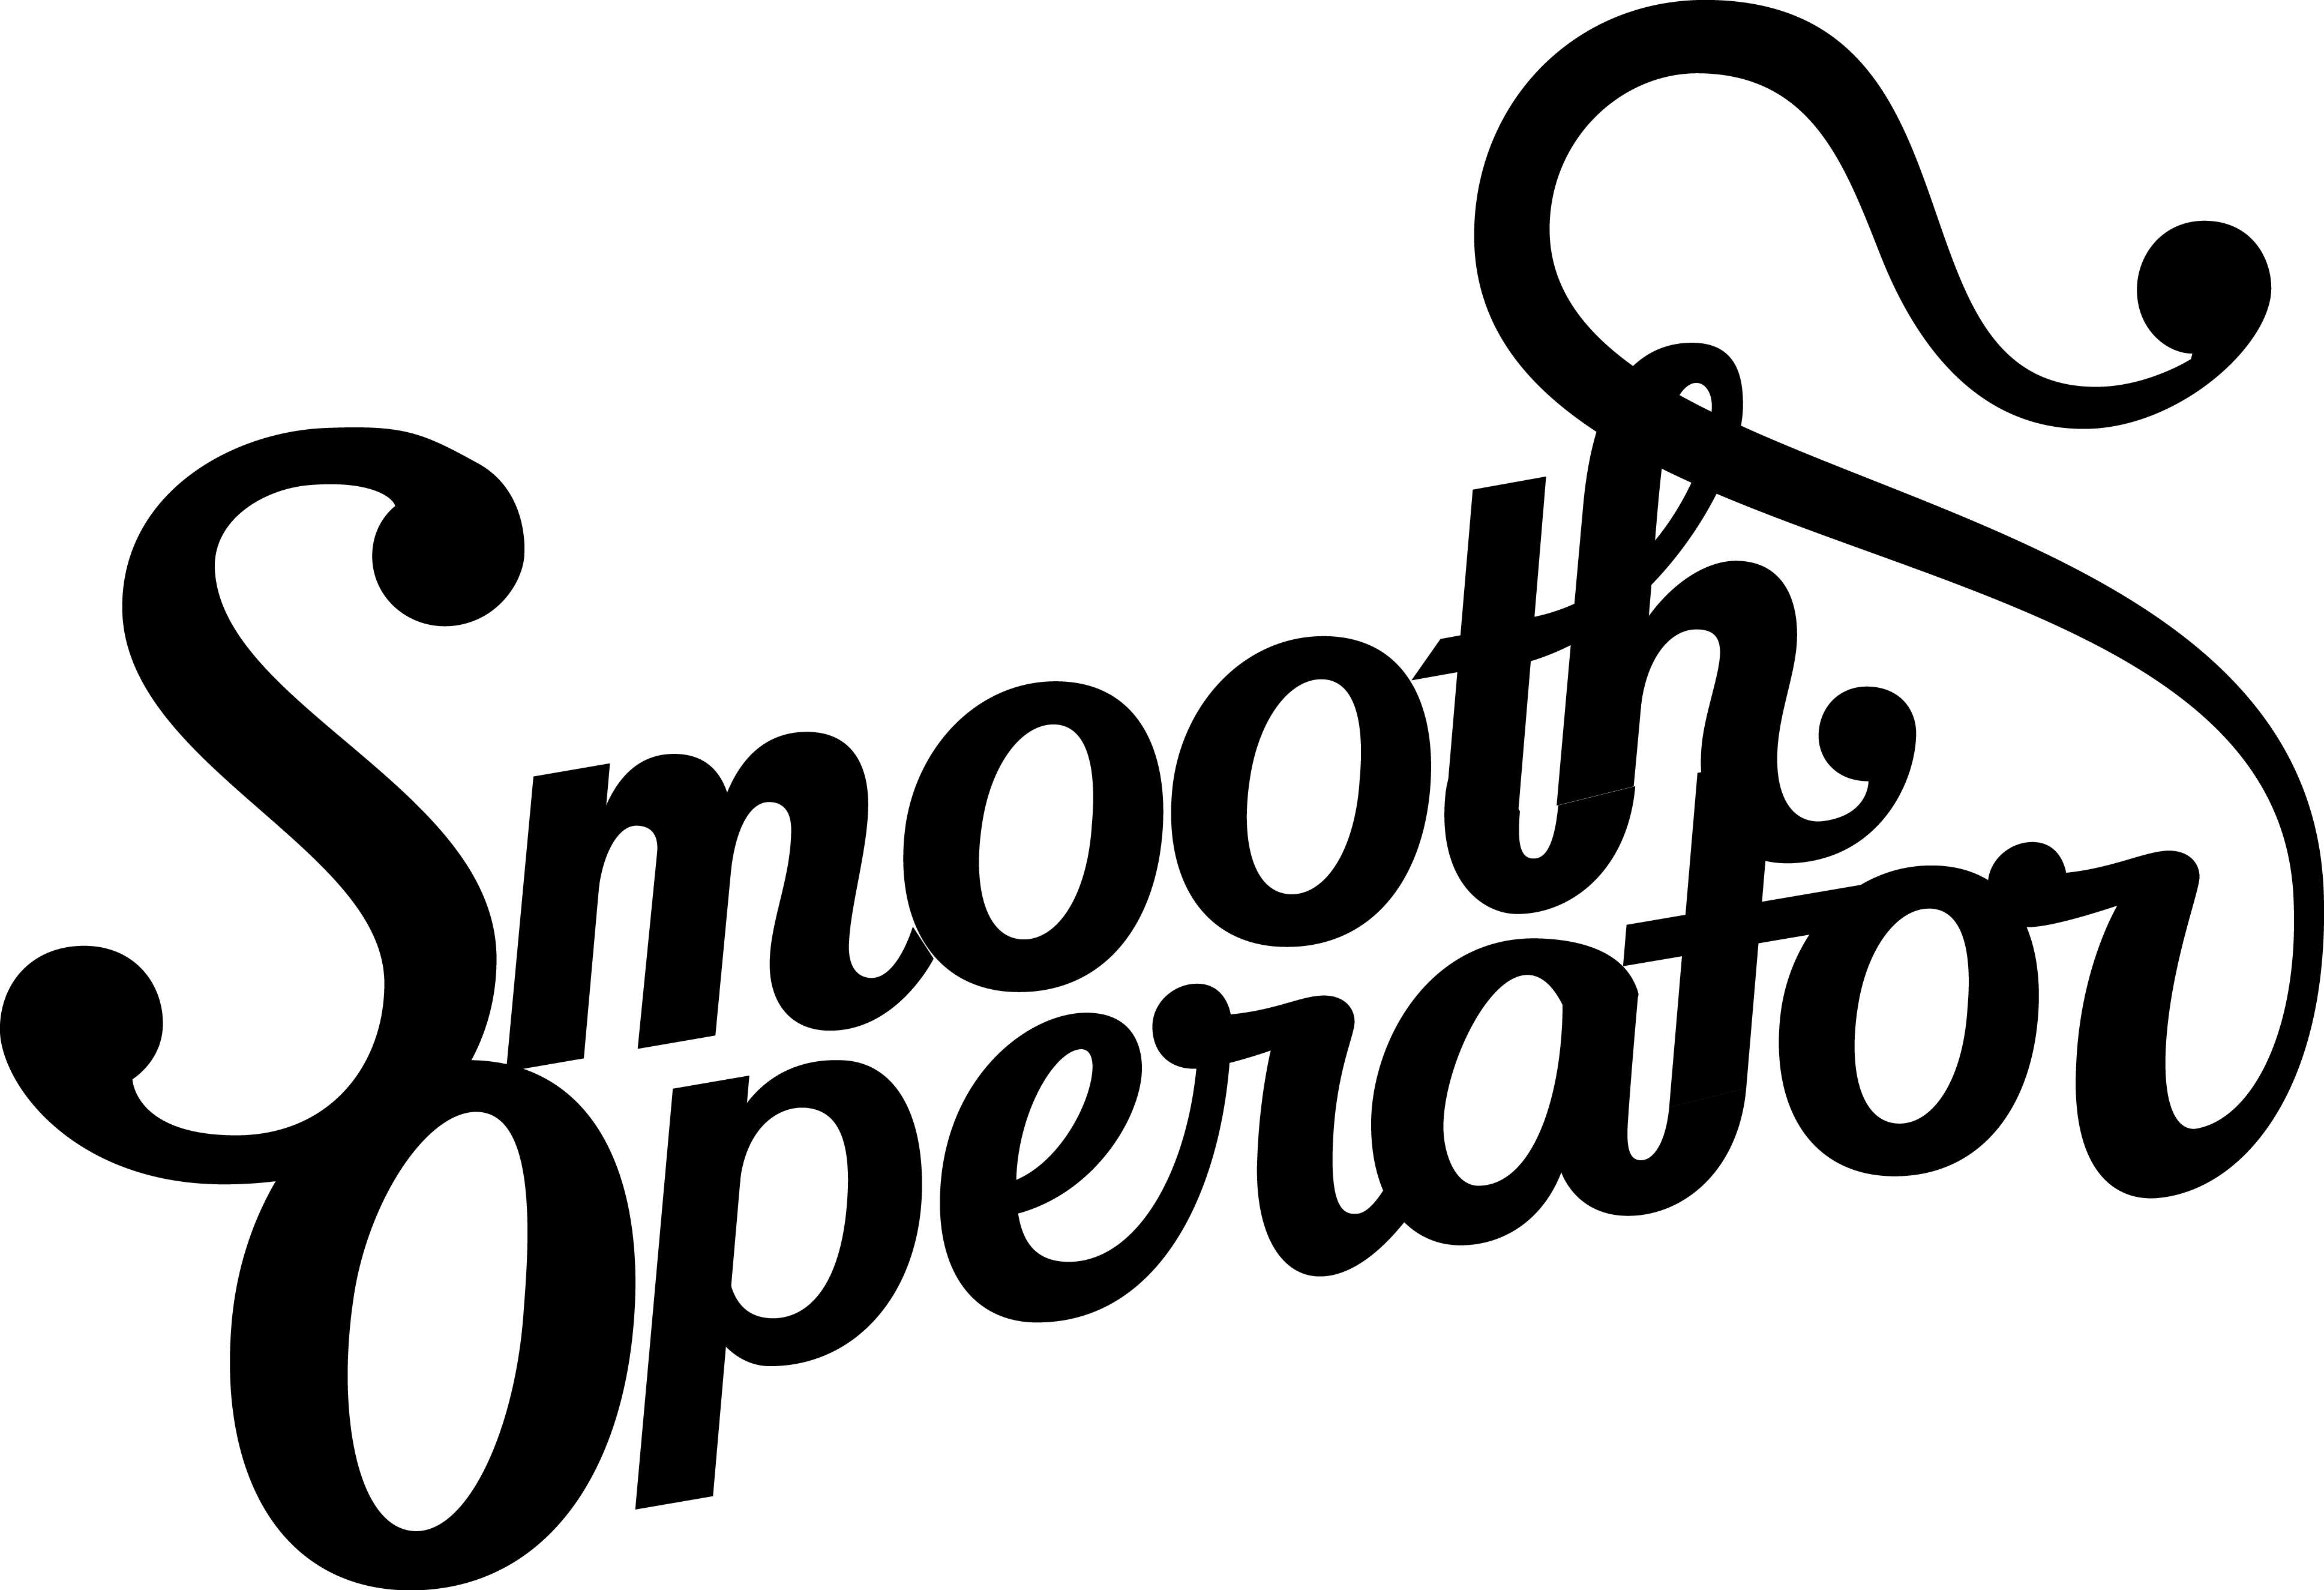 Smooth Operator - Crunchbase Company Profile & Funding